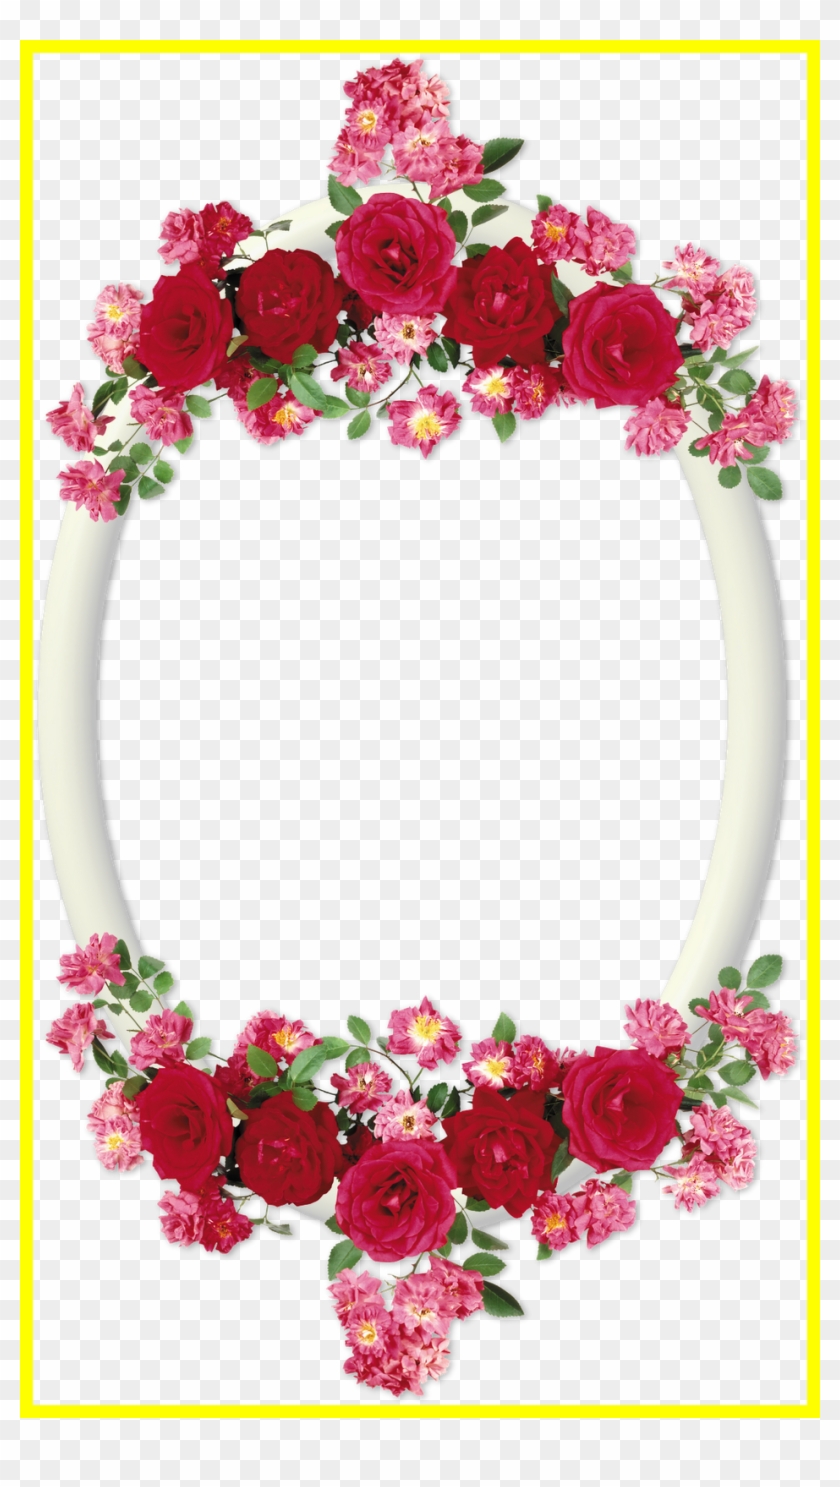 Inspiring Marcos Para Fotos Ovalados Con Flores Template - Marcos Para Fotos De Rosas Png #1230916